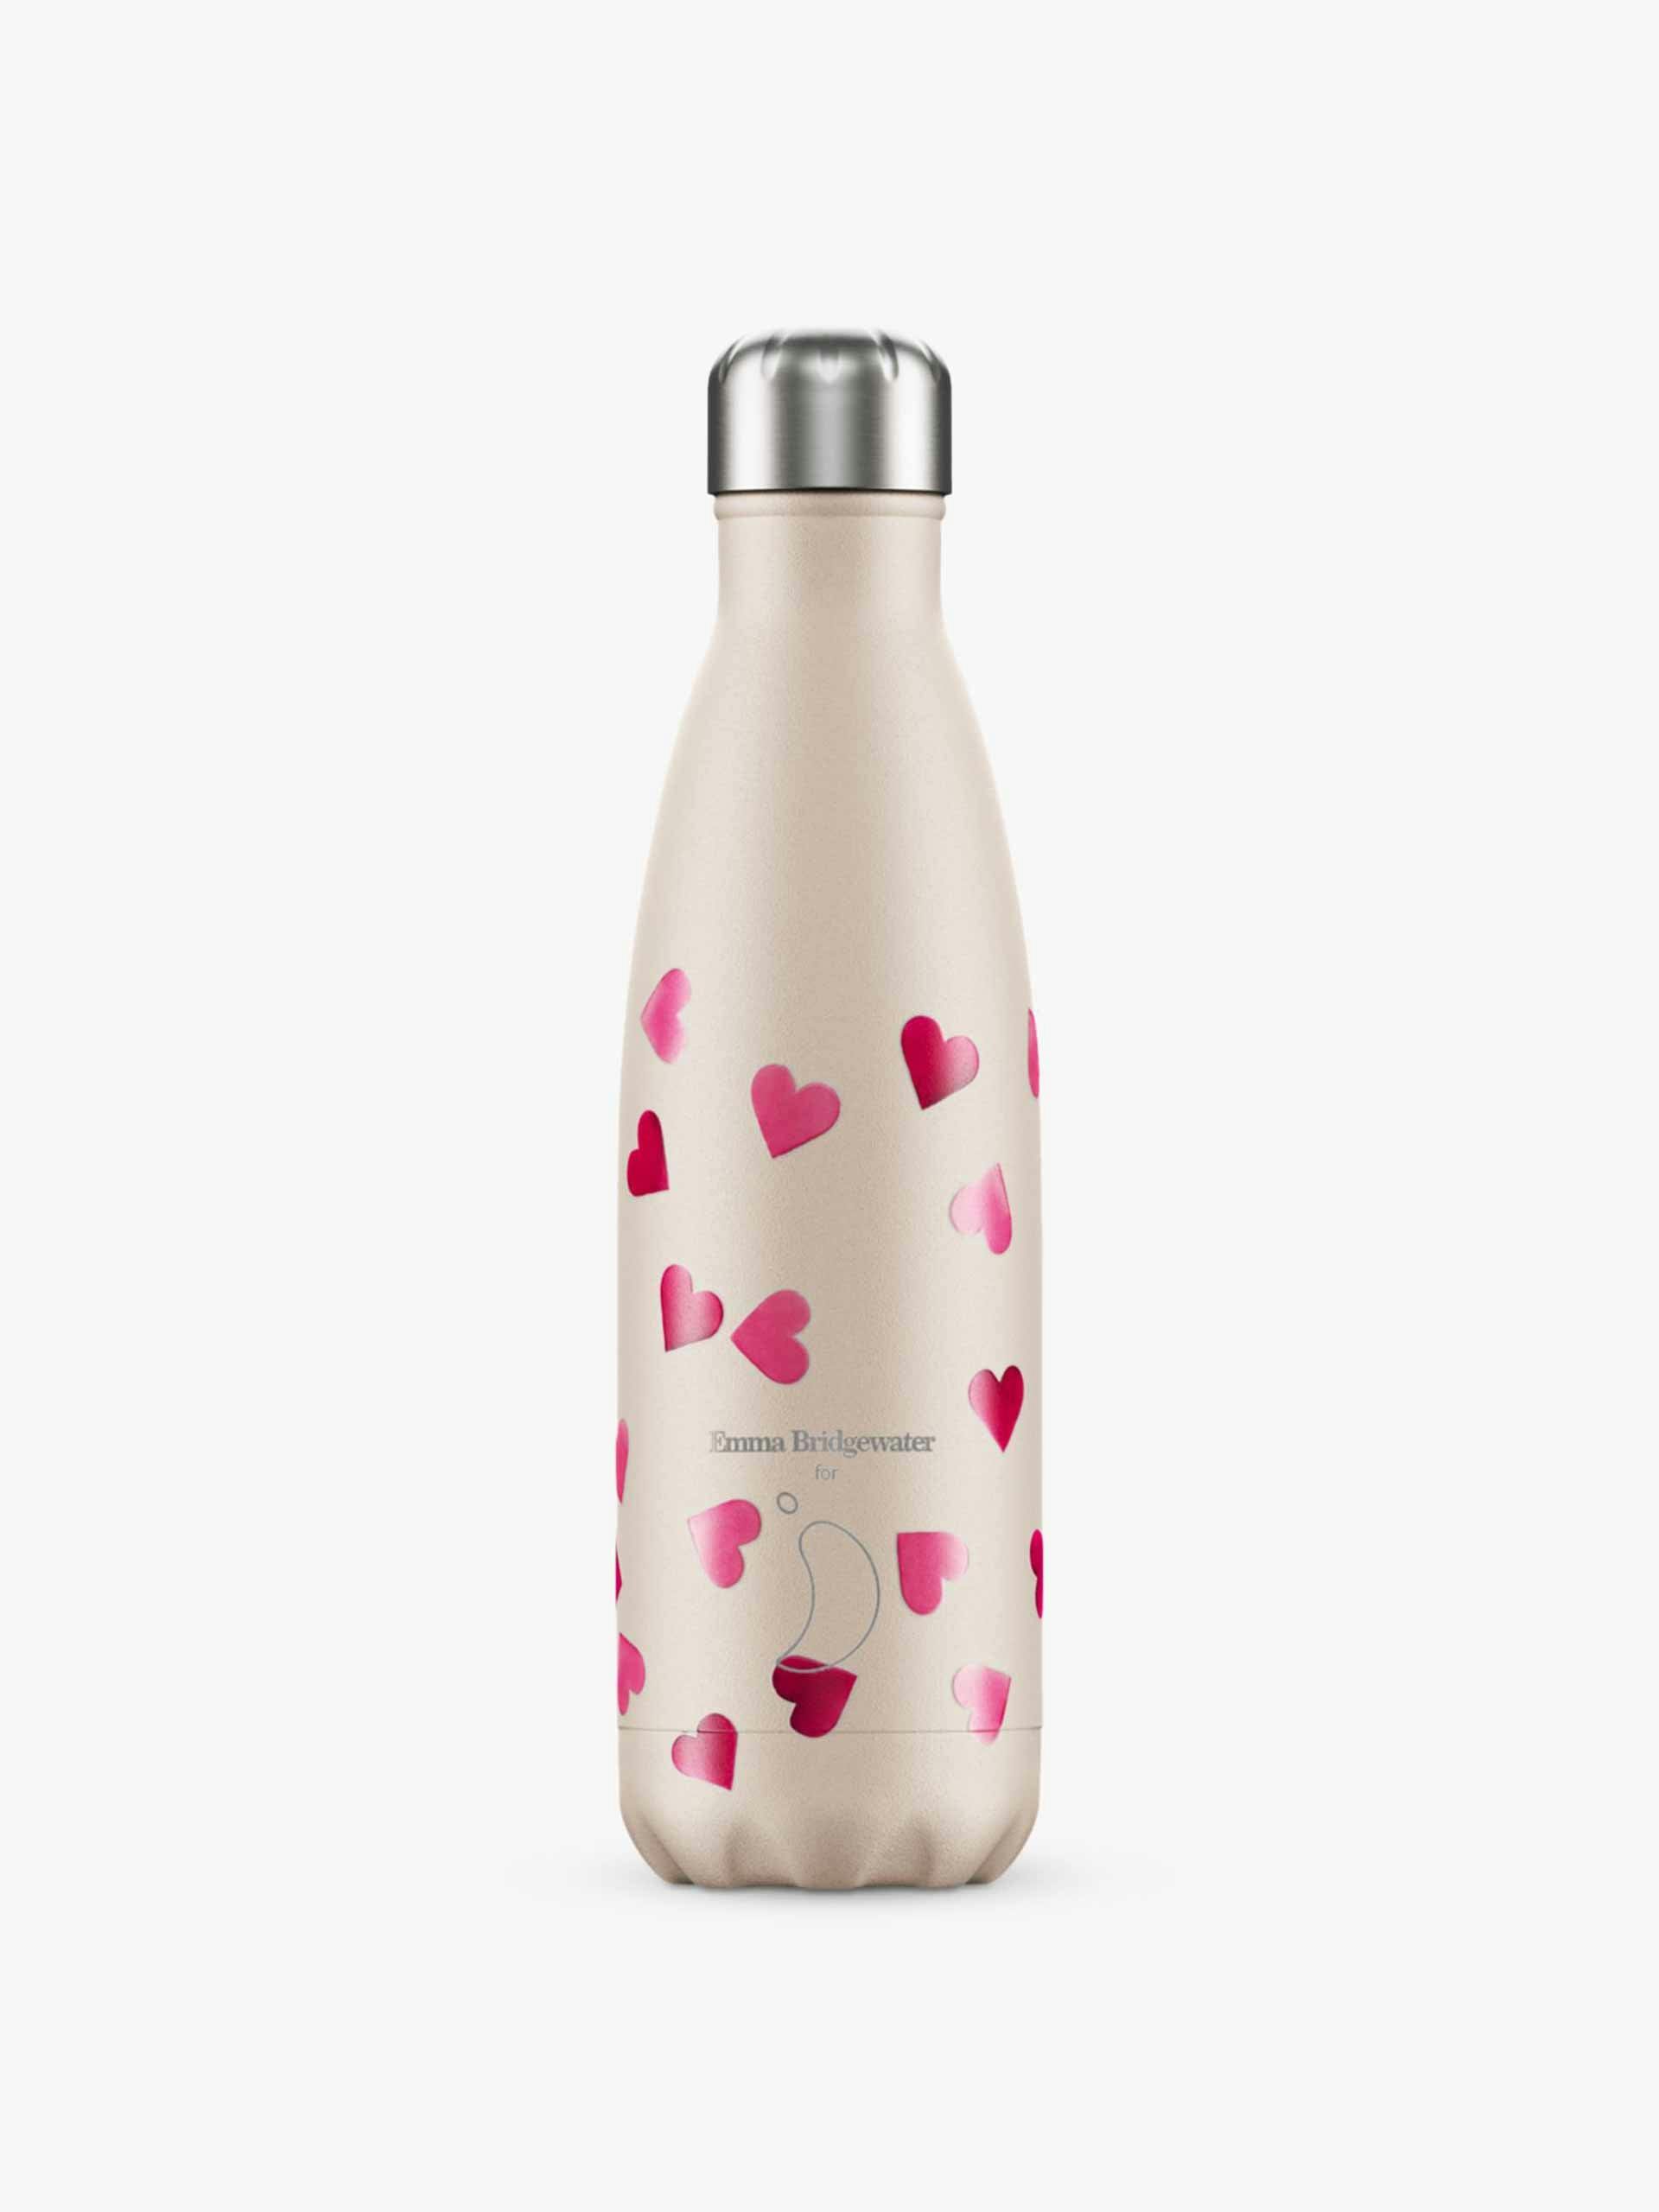 Heart print drinks bottle